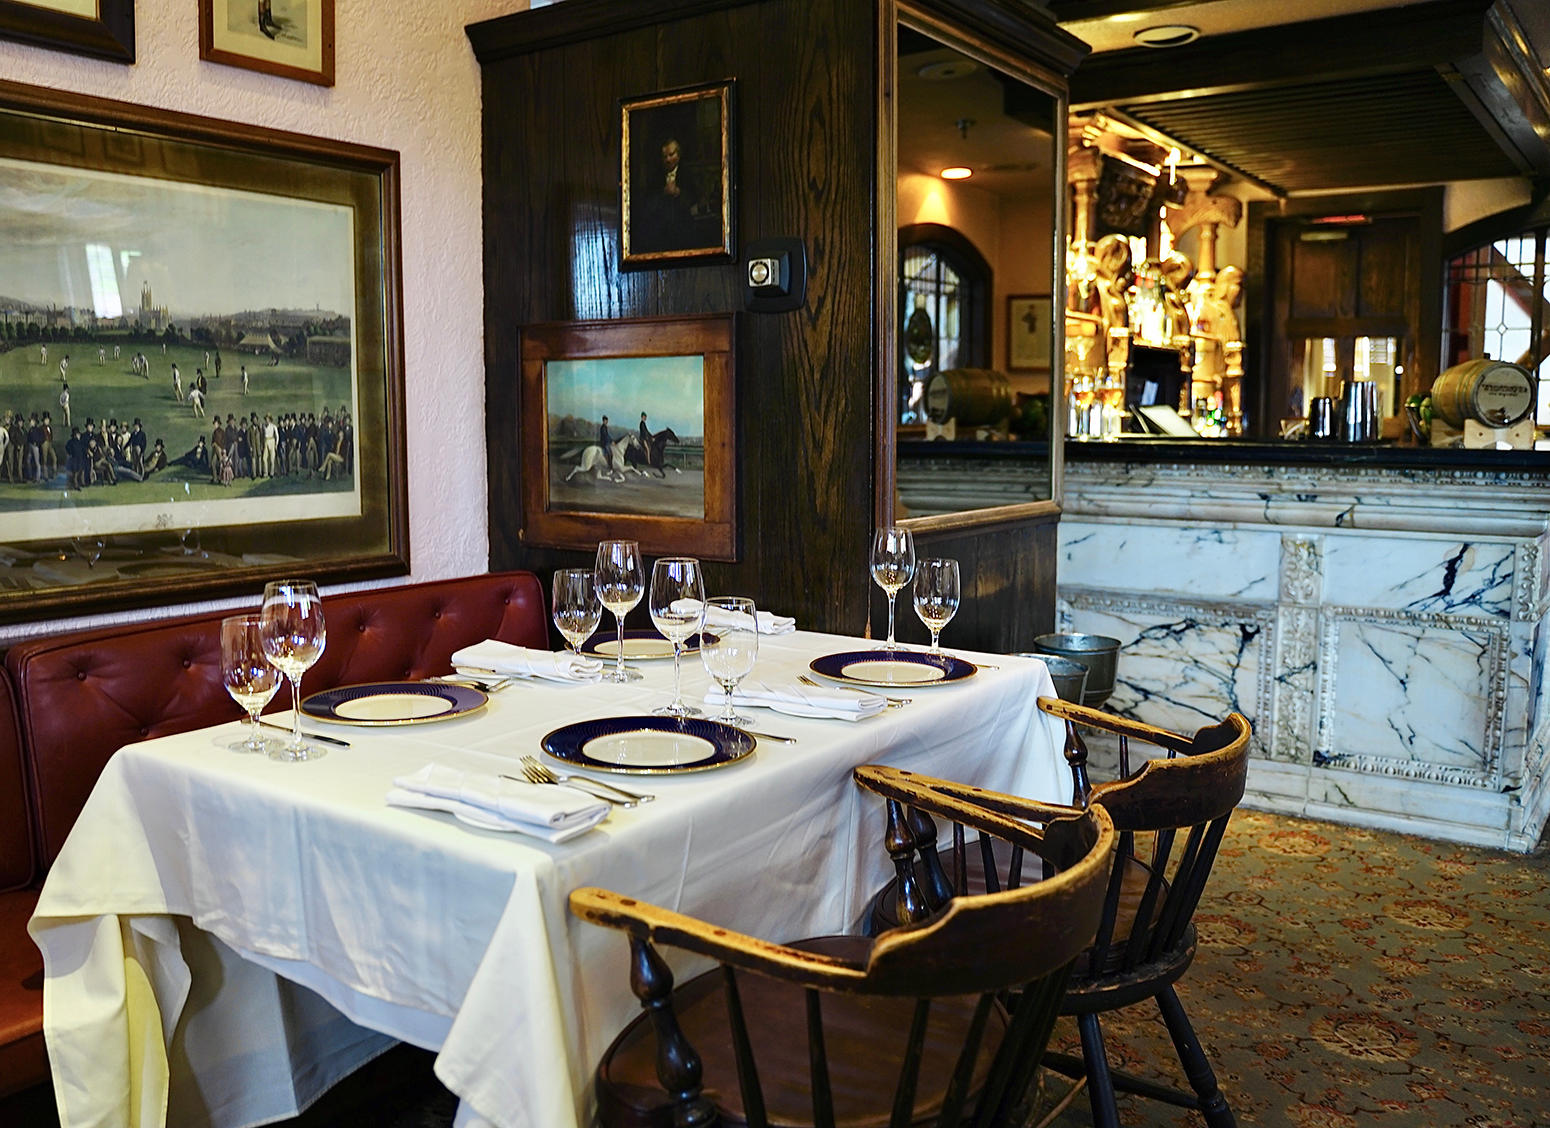 1789 Restaurant & Bar